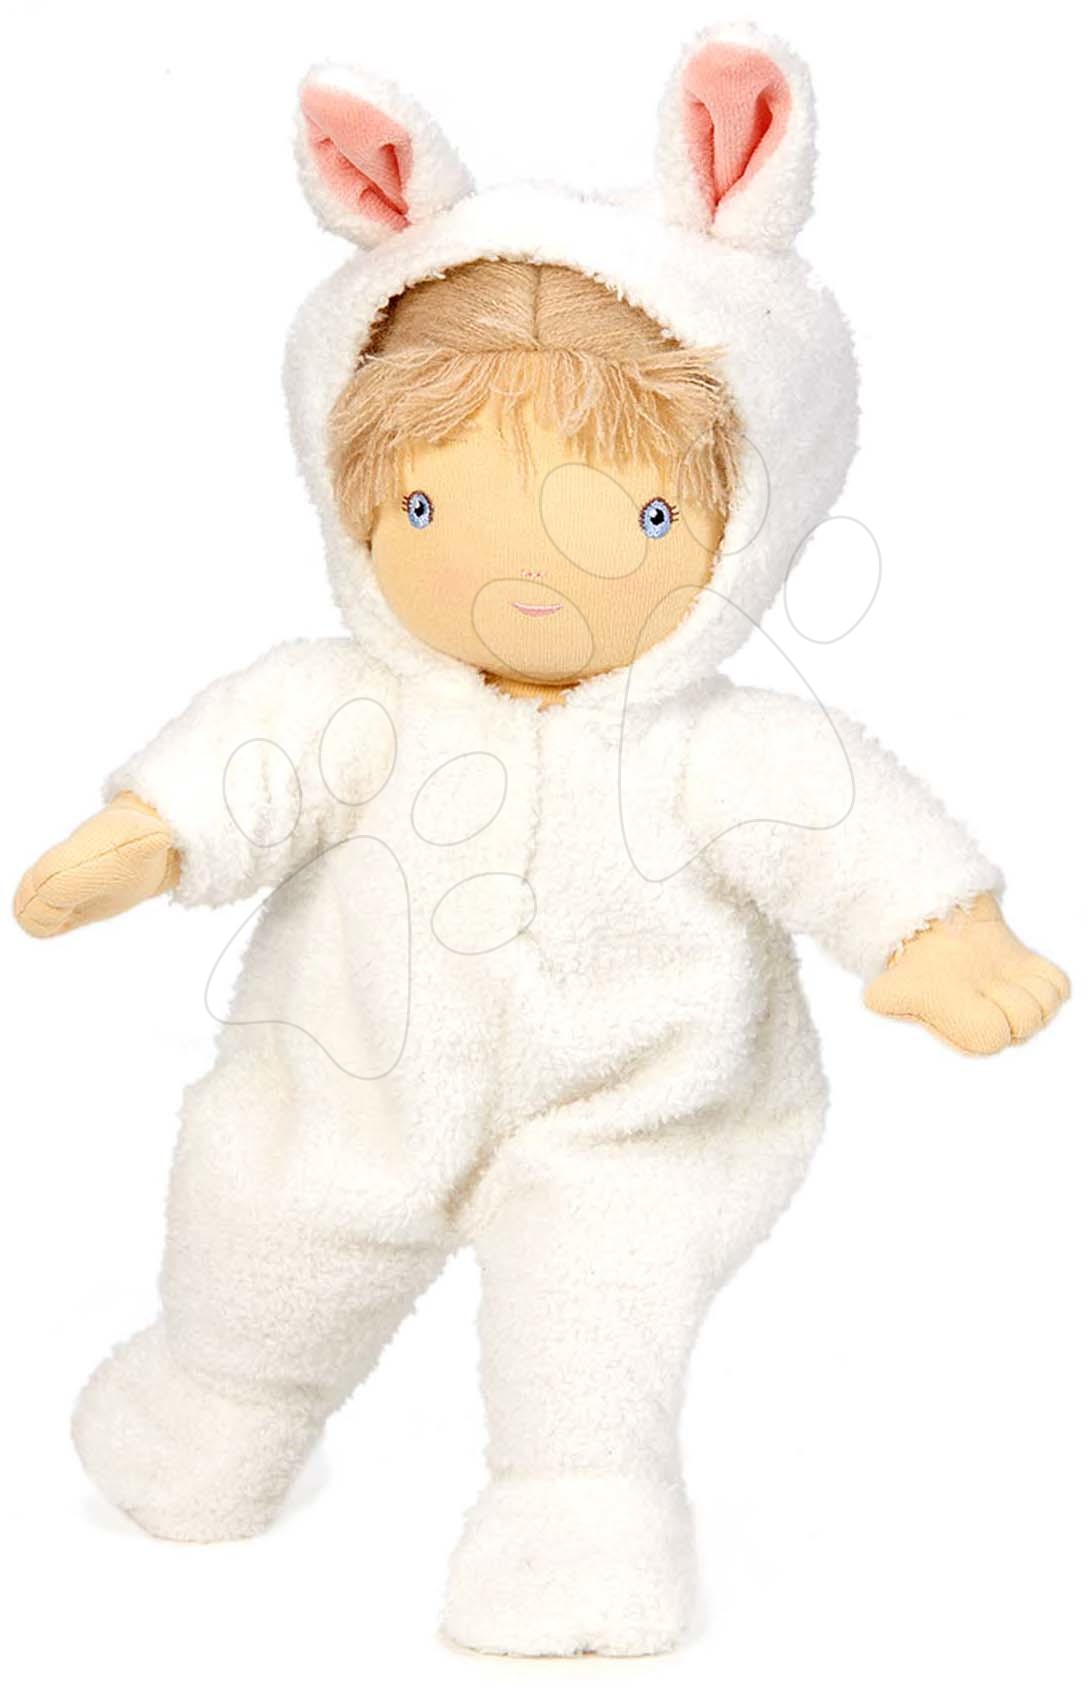 Hadrové panenky - Panenka hadrová Baby Lilli Doll ThreadBear 41 cm z jemné měkké bavlny s odnímatelnou plenou